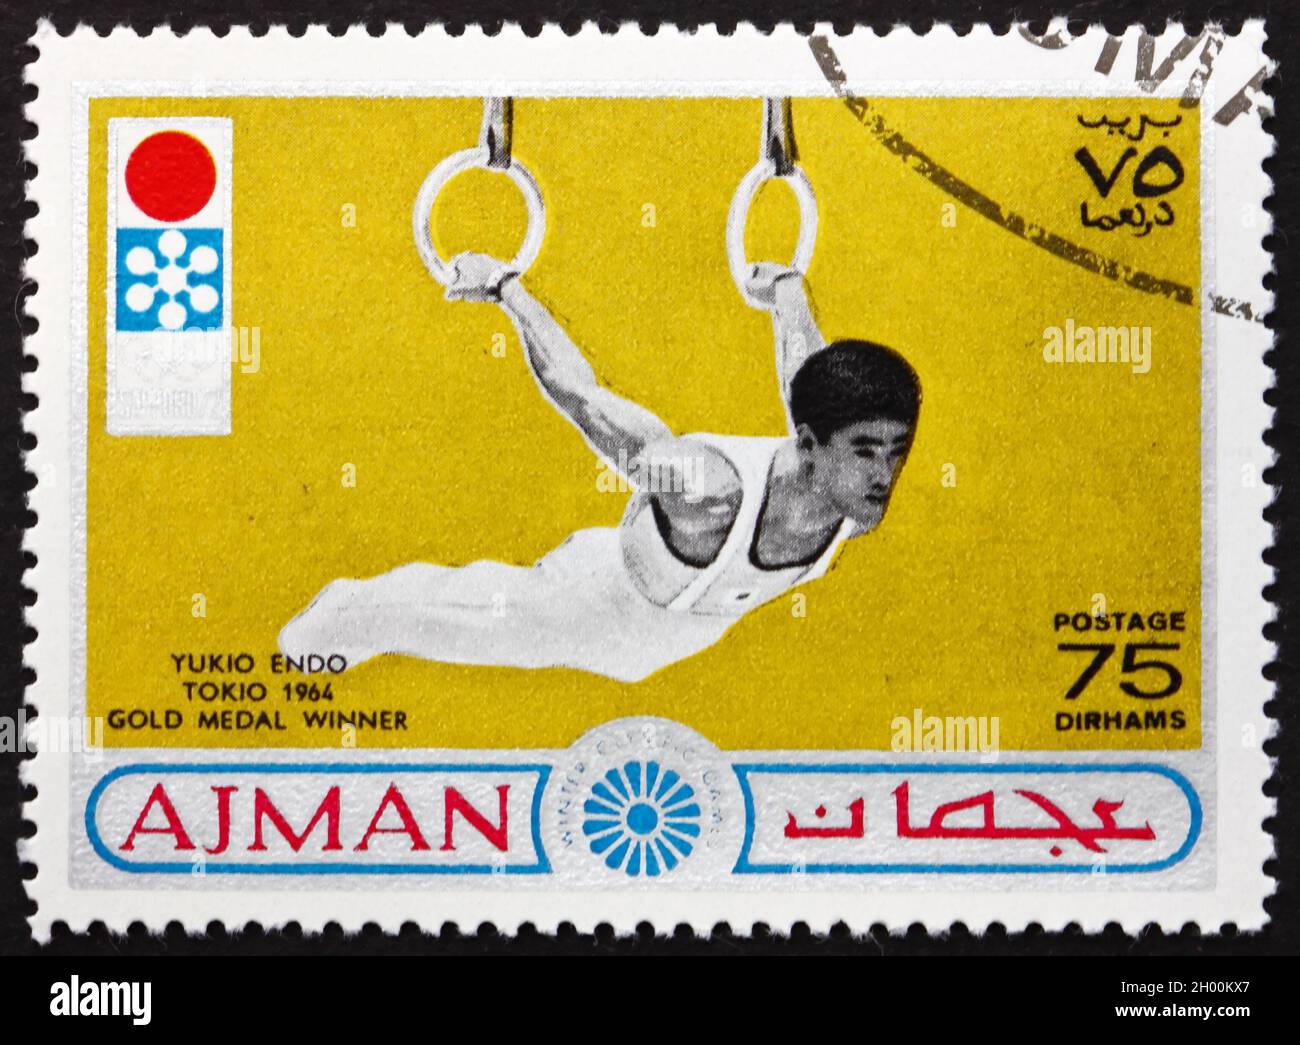 AJMAN - CIRCA 1964: a stamp printed in Ajman shows Yukio Endo, Japanese Artistic Gymnast, Tokio 1964 Gold Medal Winner, circa 1964 Stock Photo